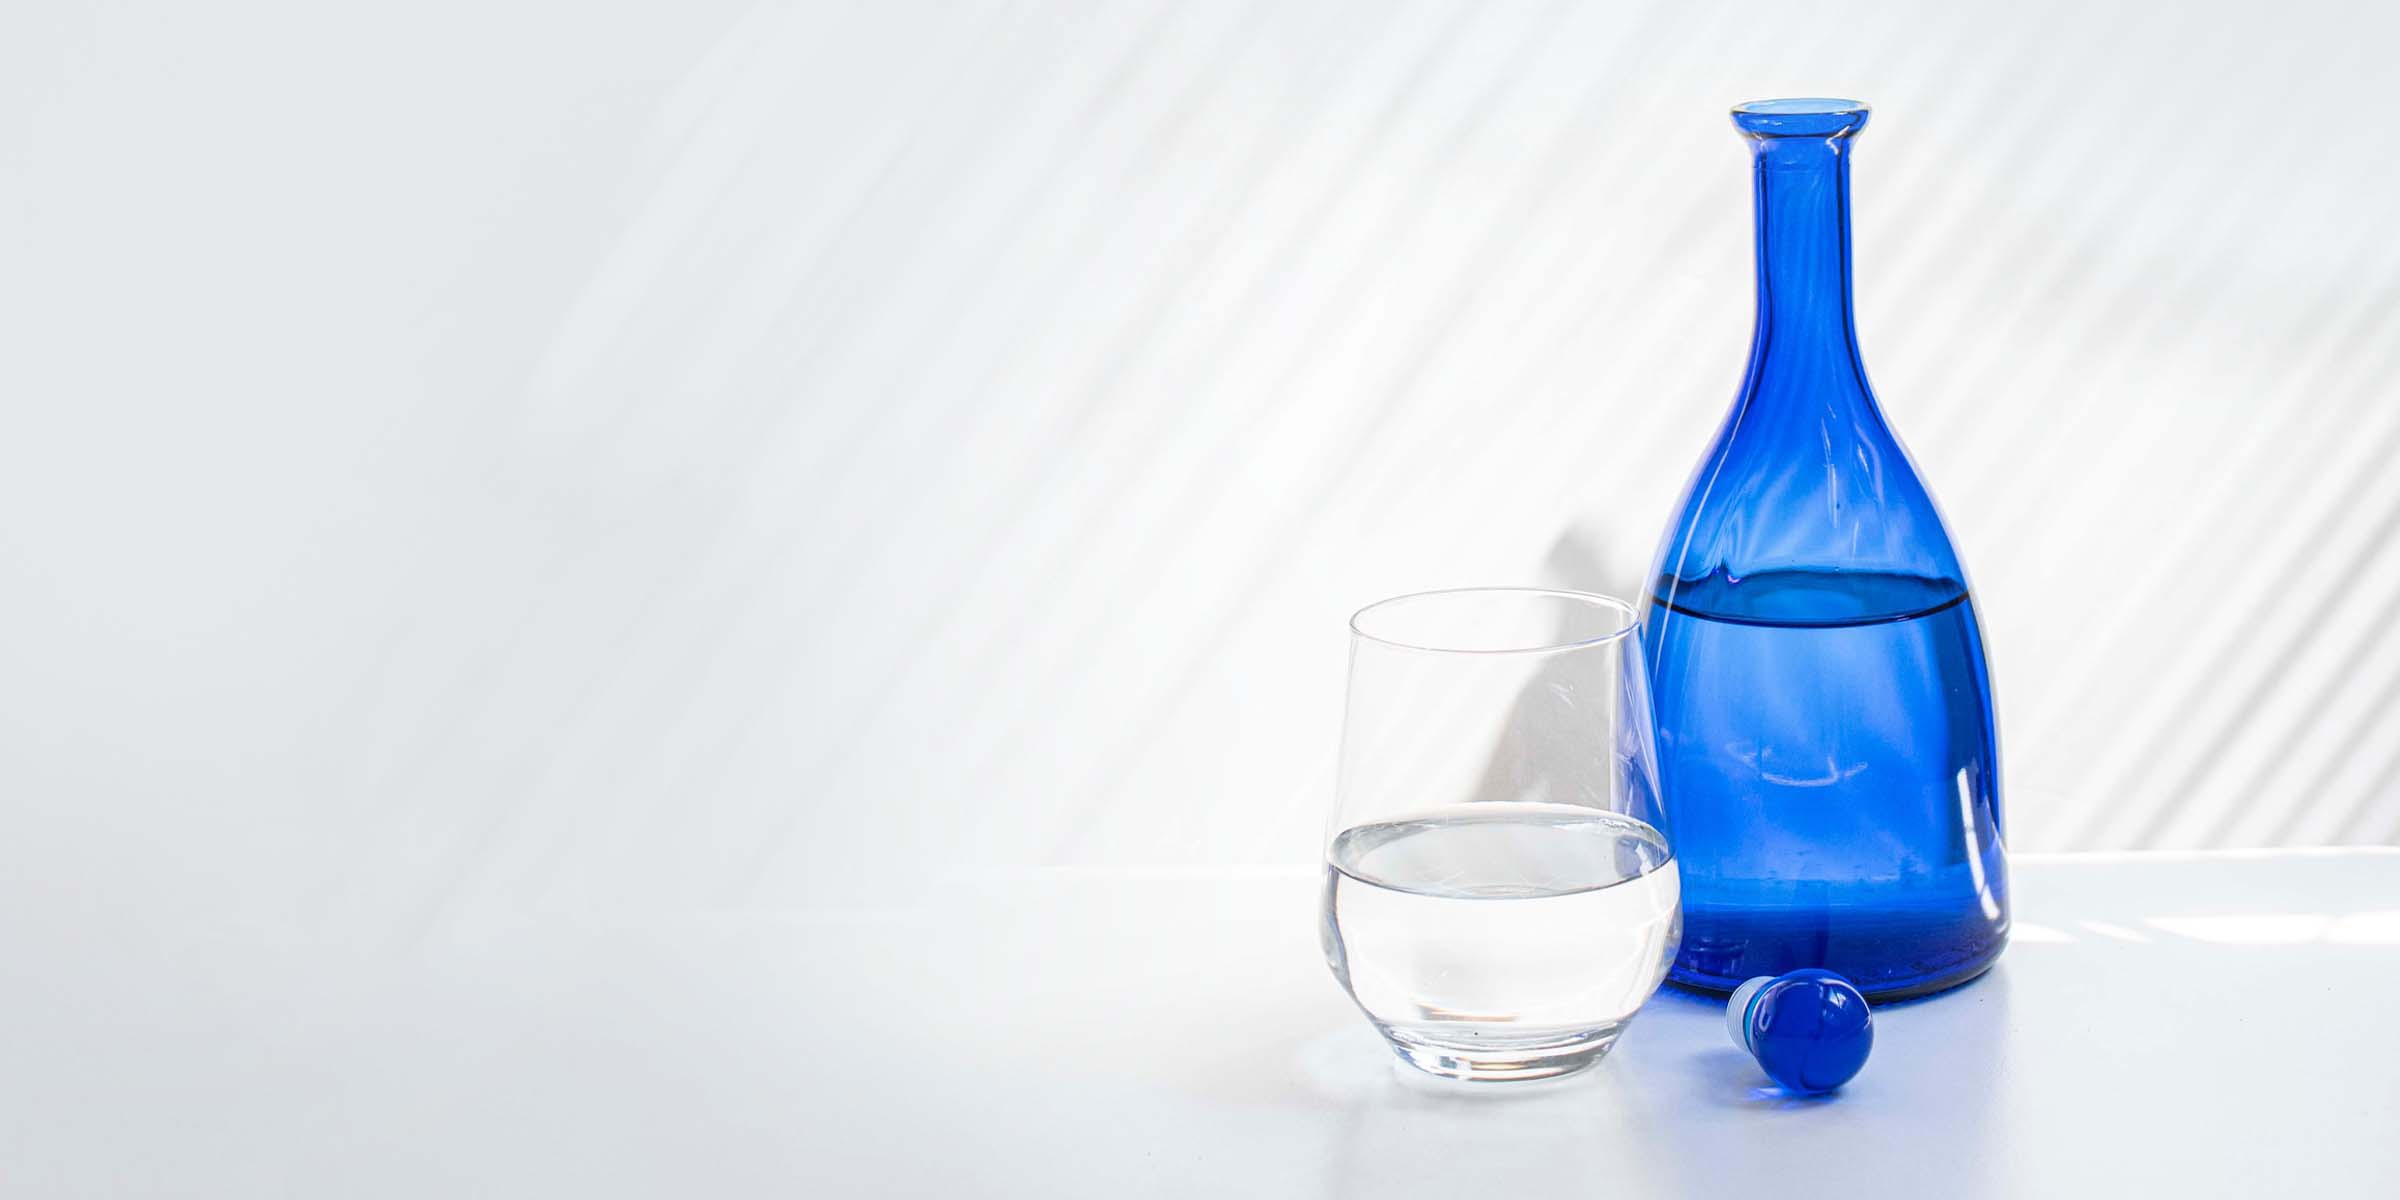 Bottled water - Made Blue Foundation